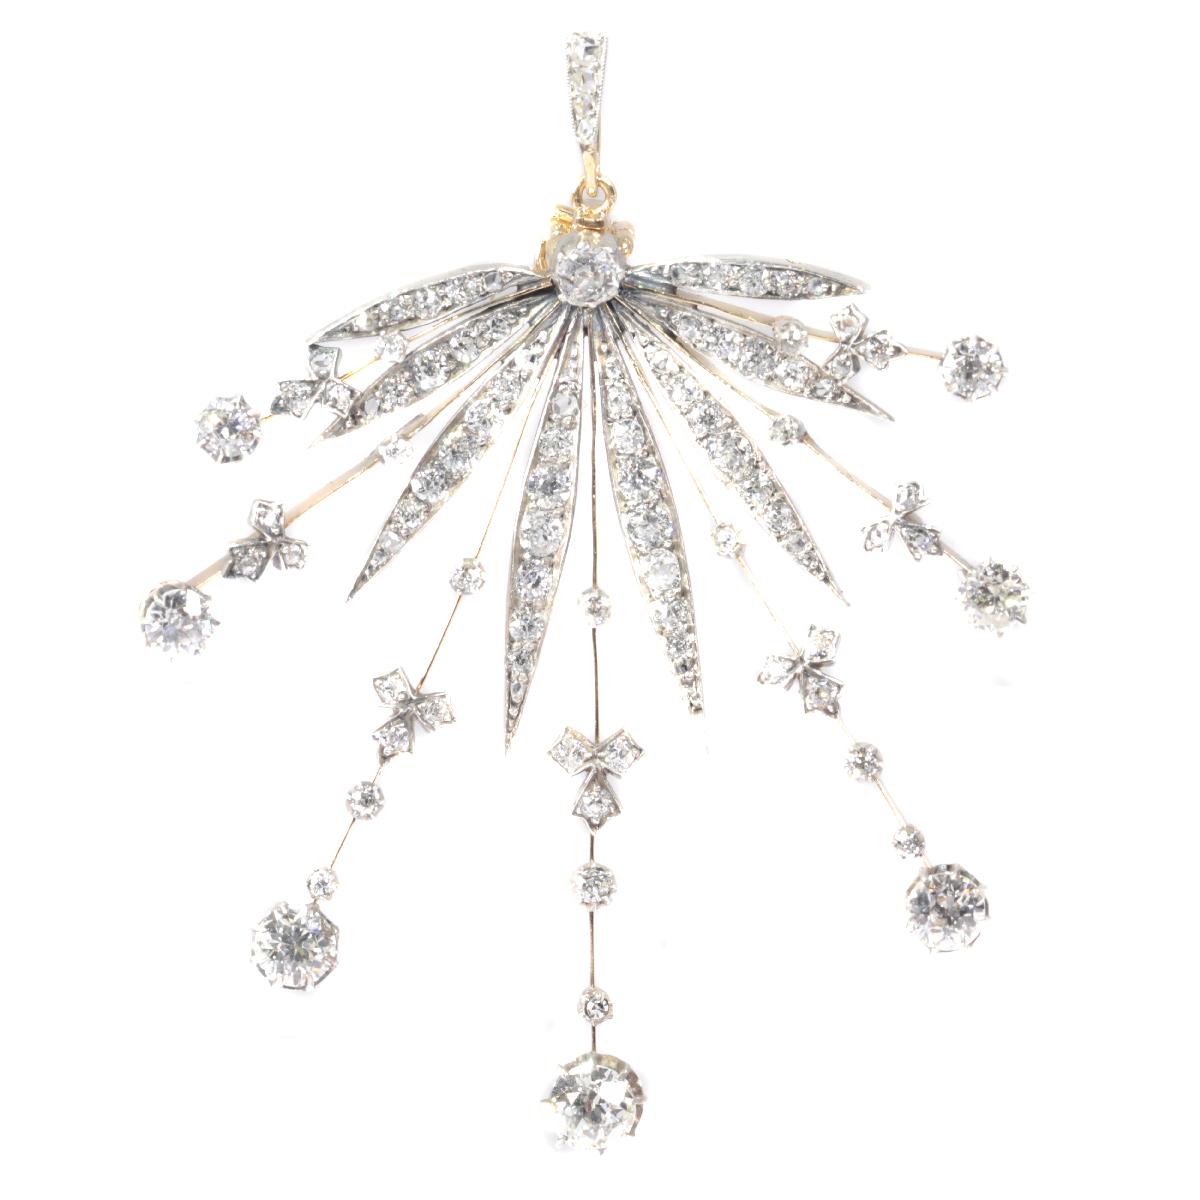 Belle Époque 6.65 Carat Diamond Tiara Also Pendant, Necklace or Brooch, 1900s 1